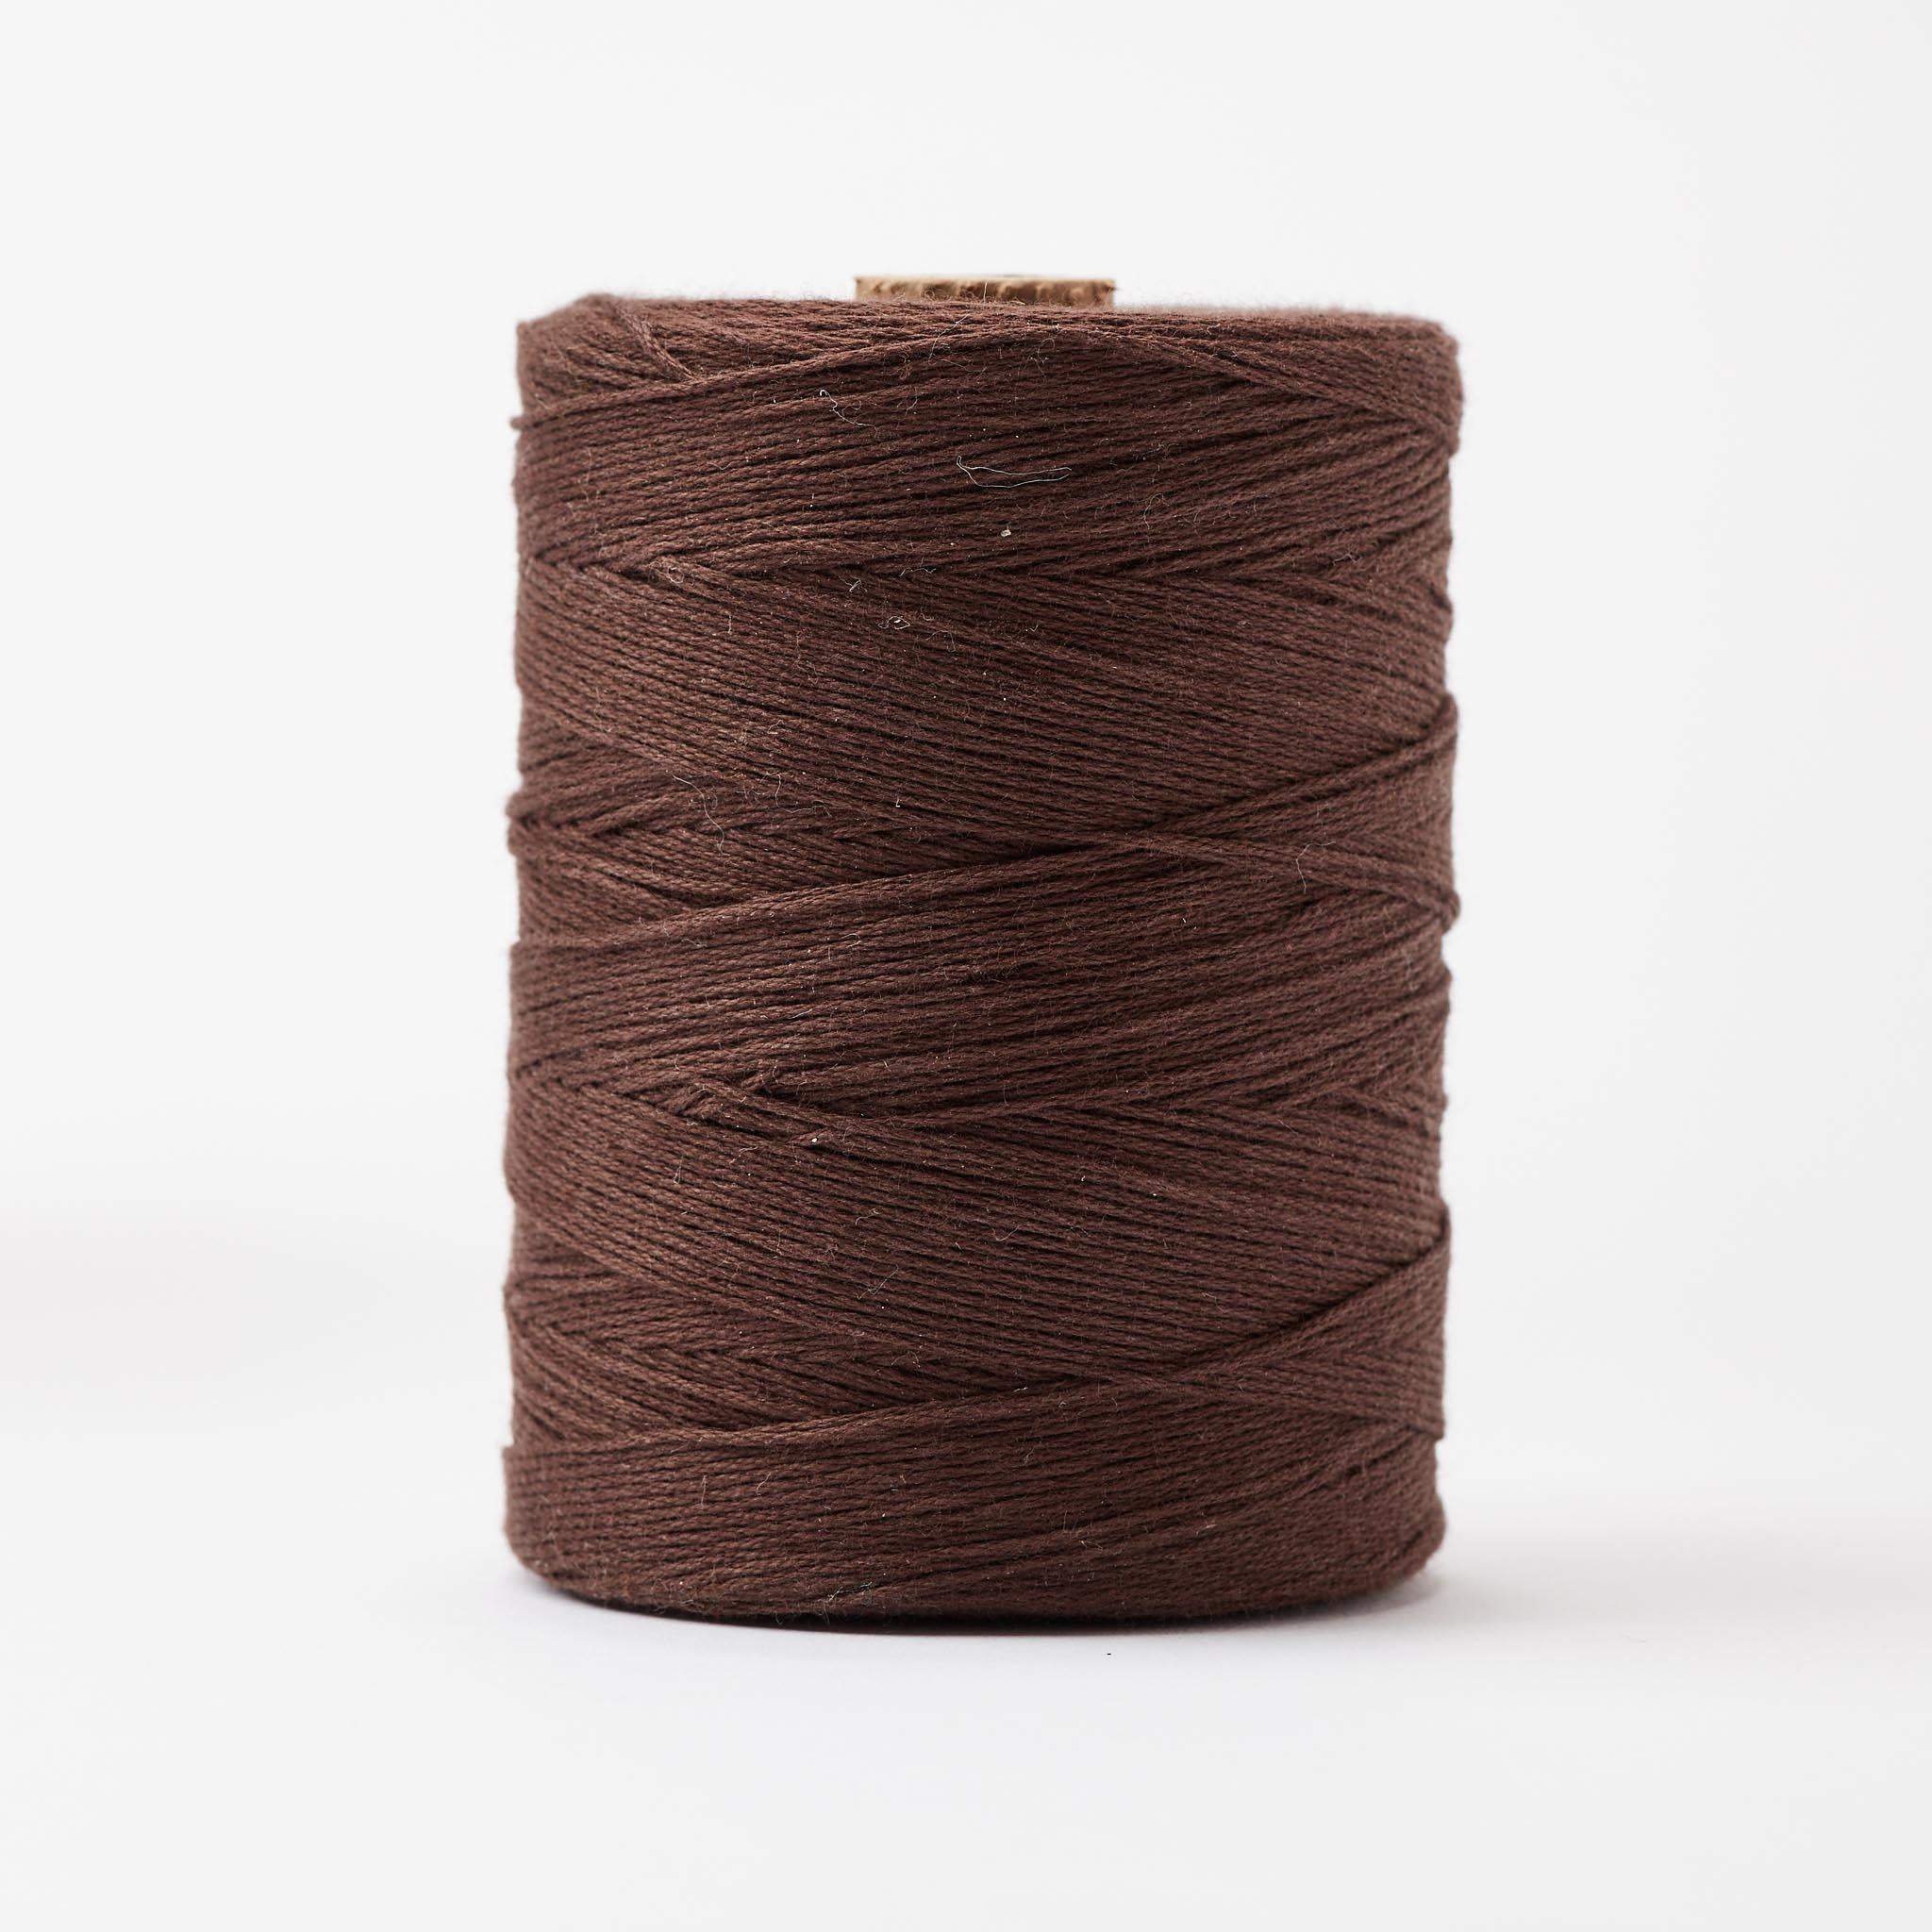 8/4 Un-Mercerized Cotton Weaving Yarn ~ Chocolate - Gist Yarn